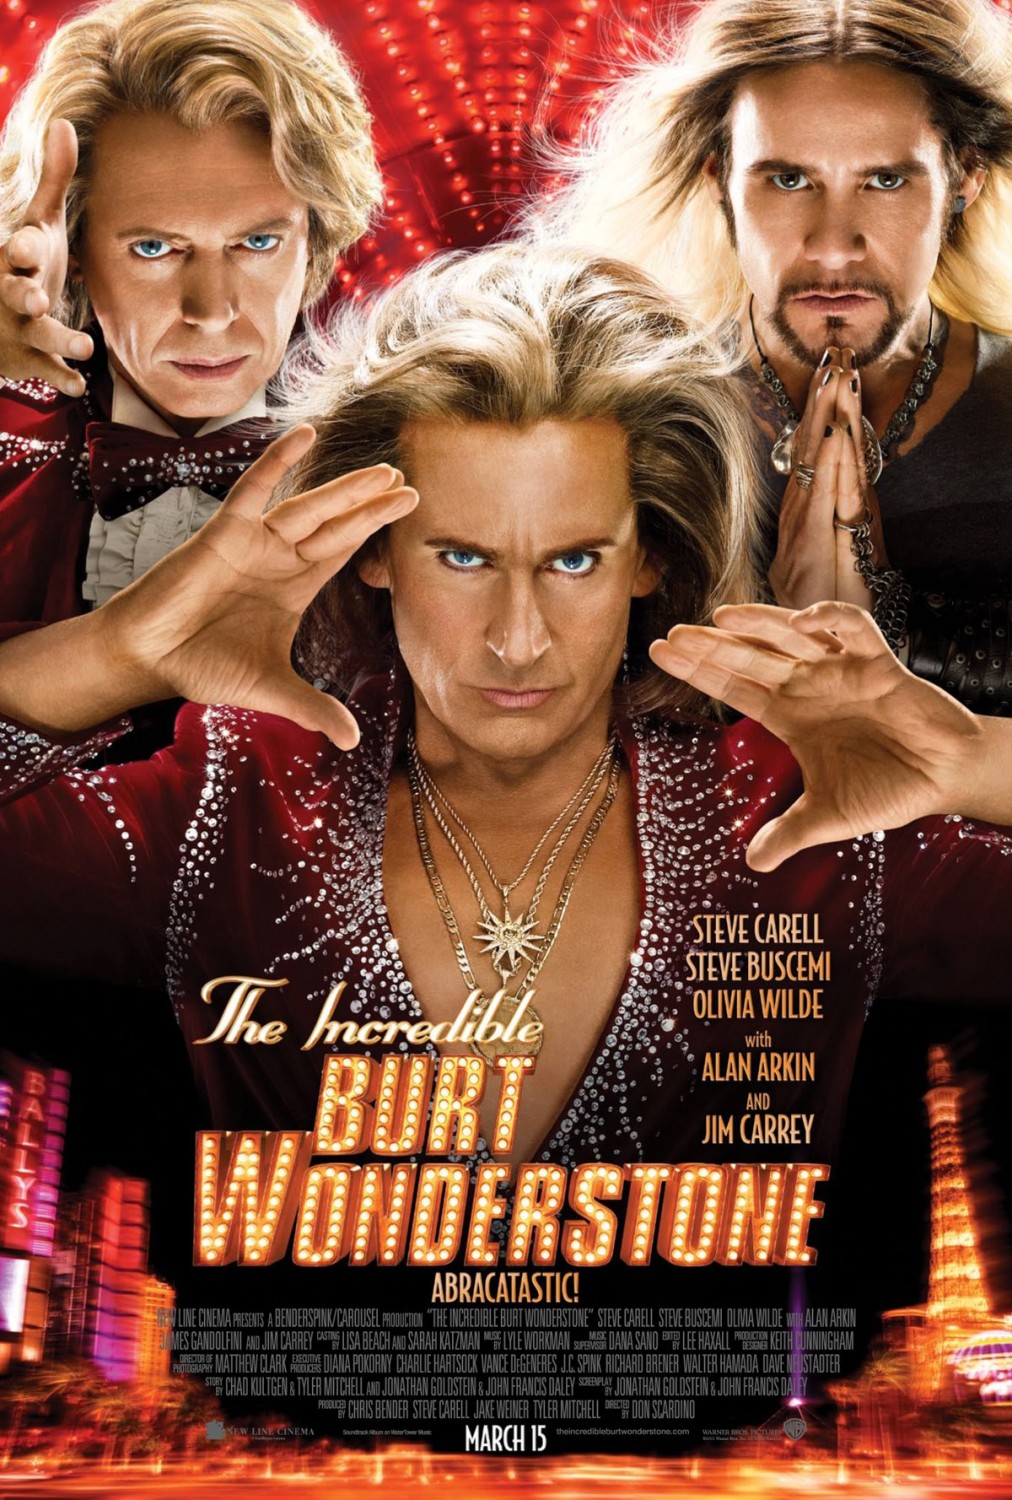 The Incredible Burt Wonderstone - Poster#5